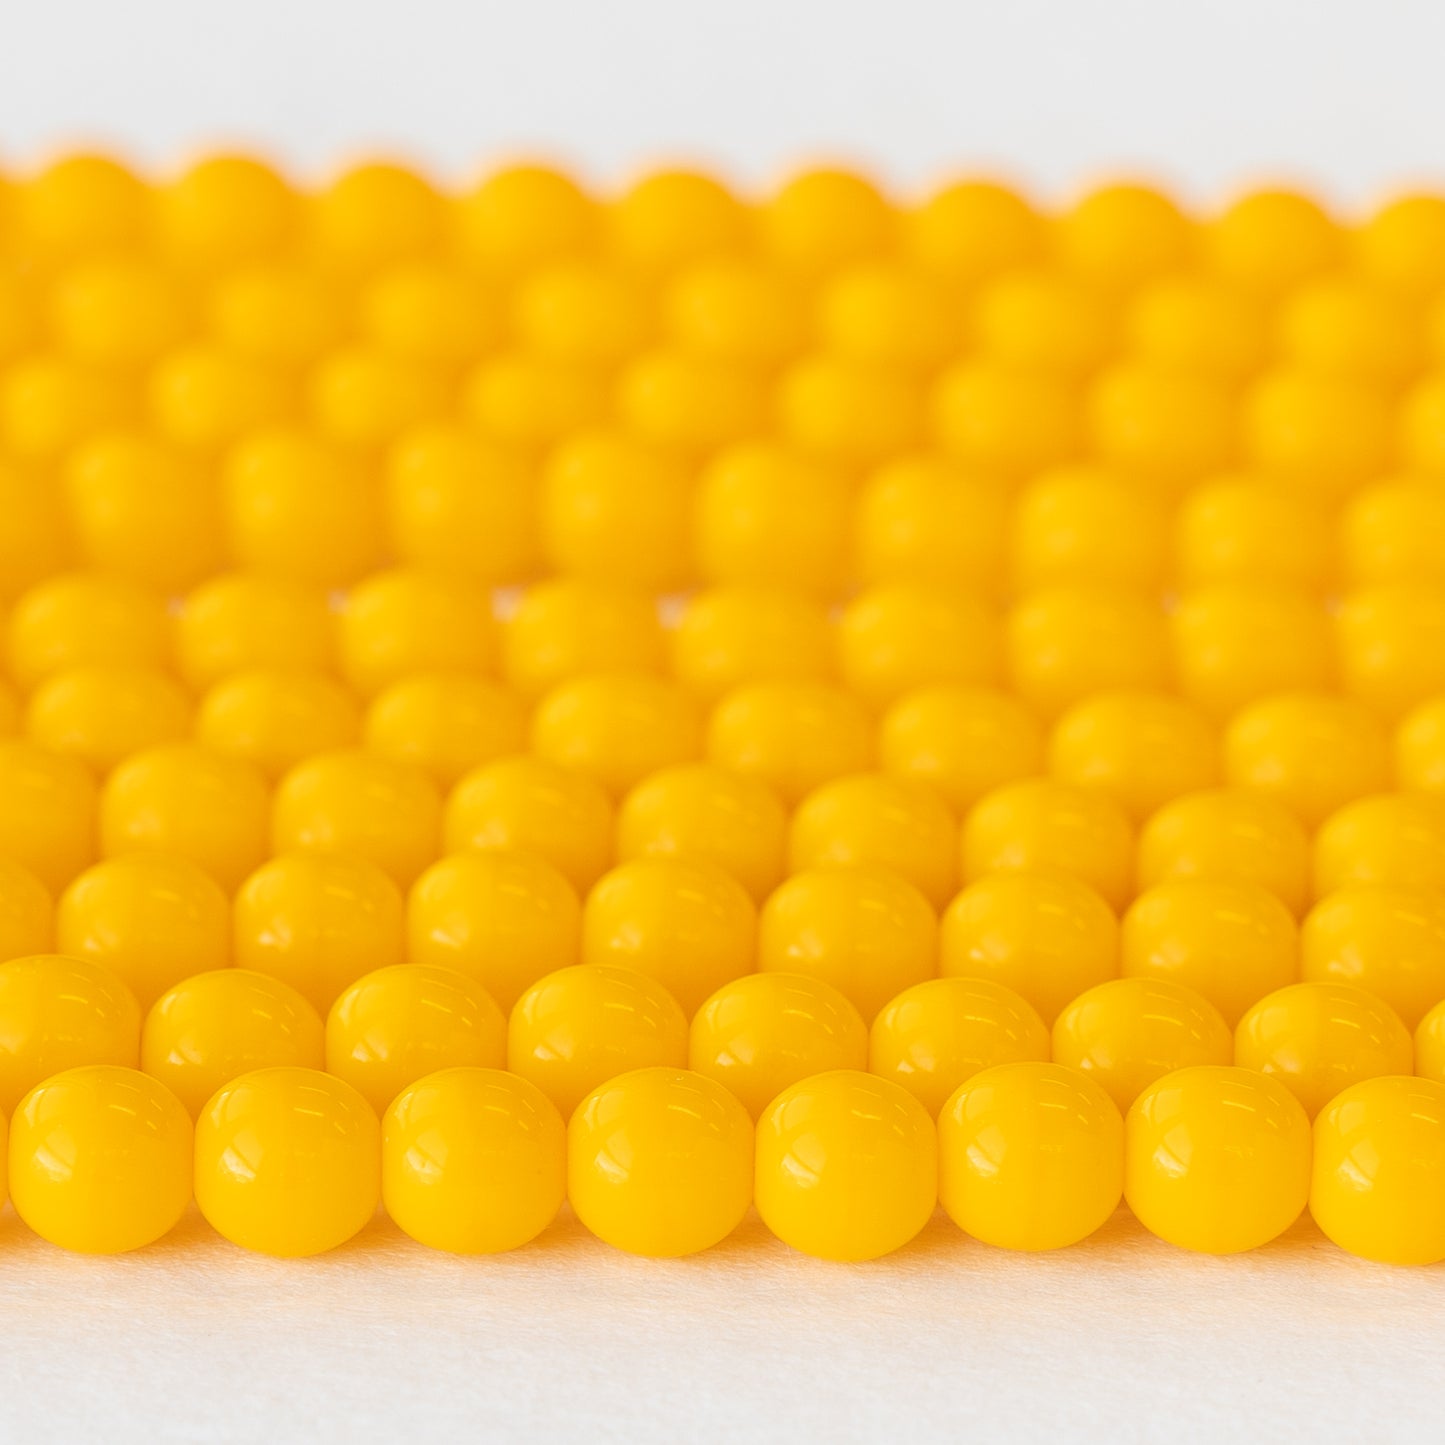 6mm Round Glass Beads - Opaque Sunshine Yellow - 20 Beads